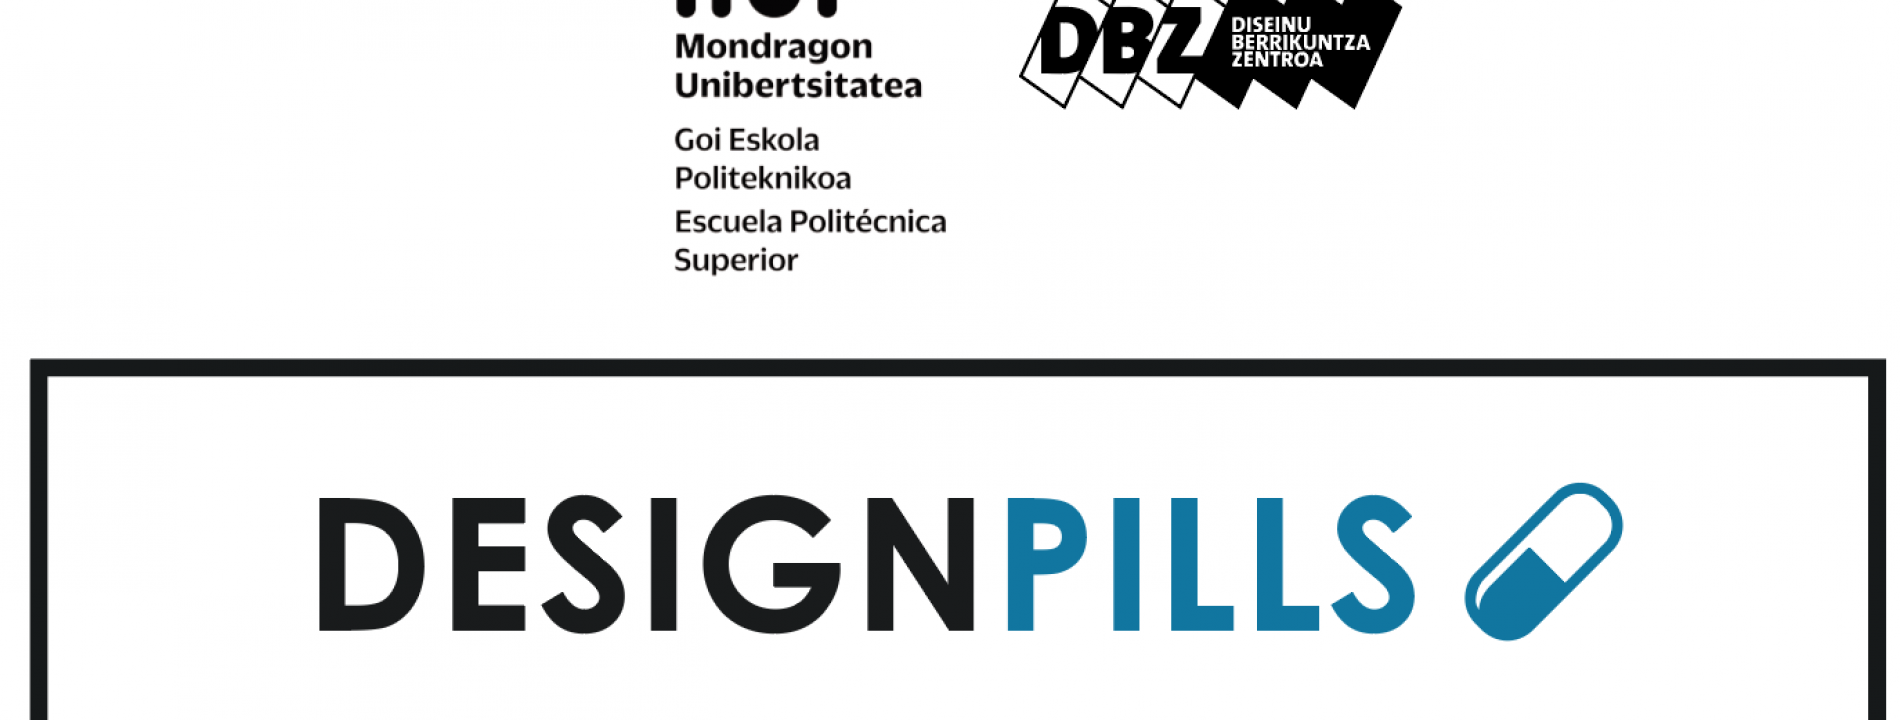 Design Pills Mondragon